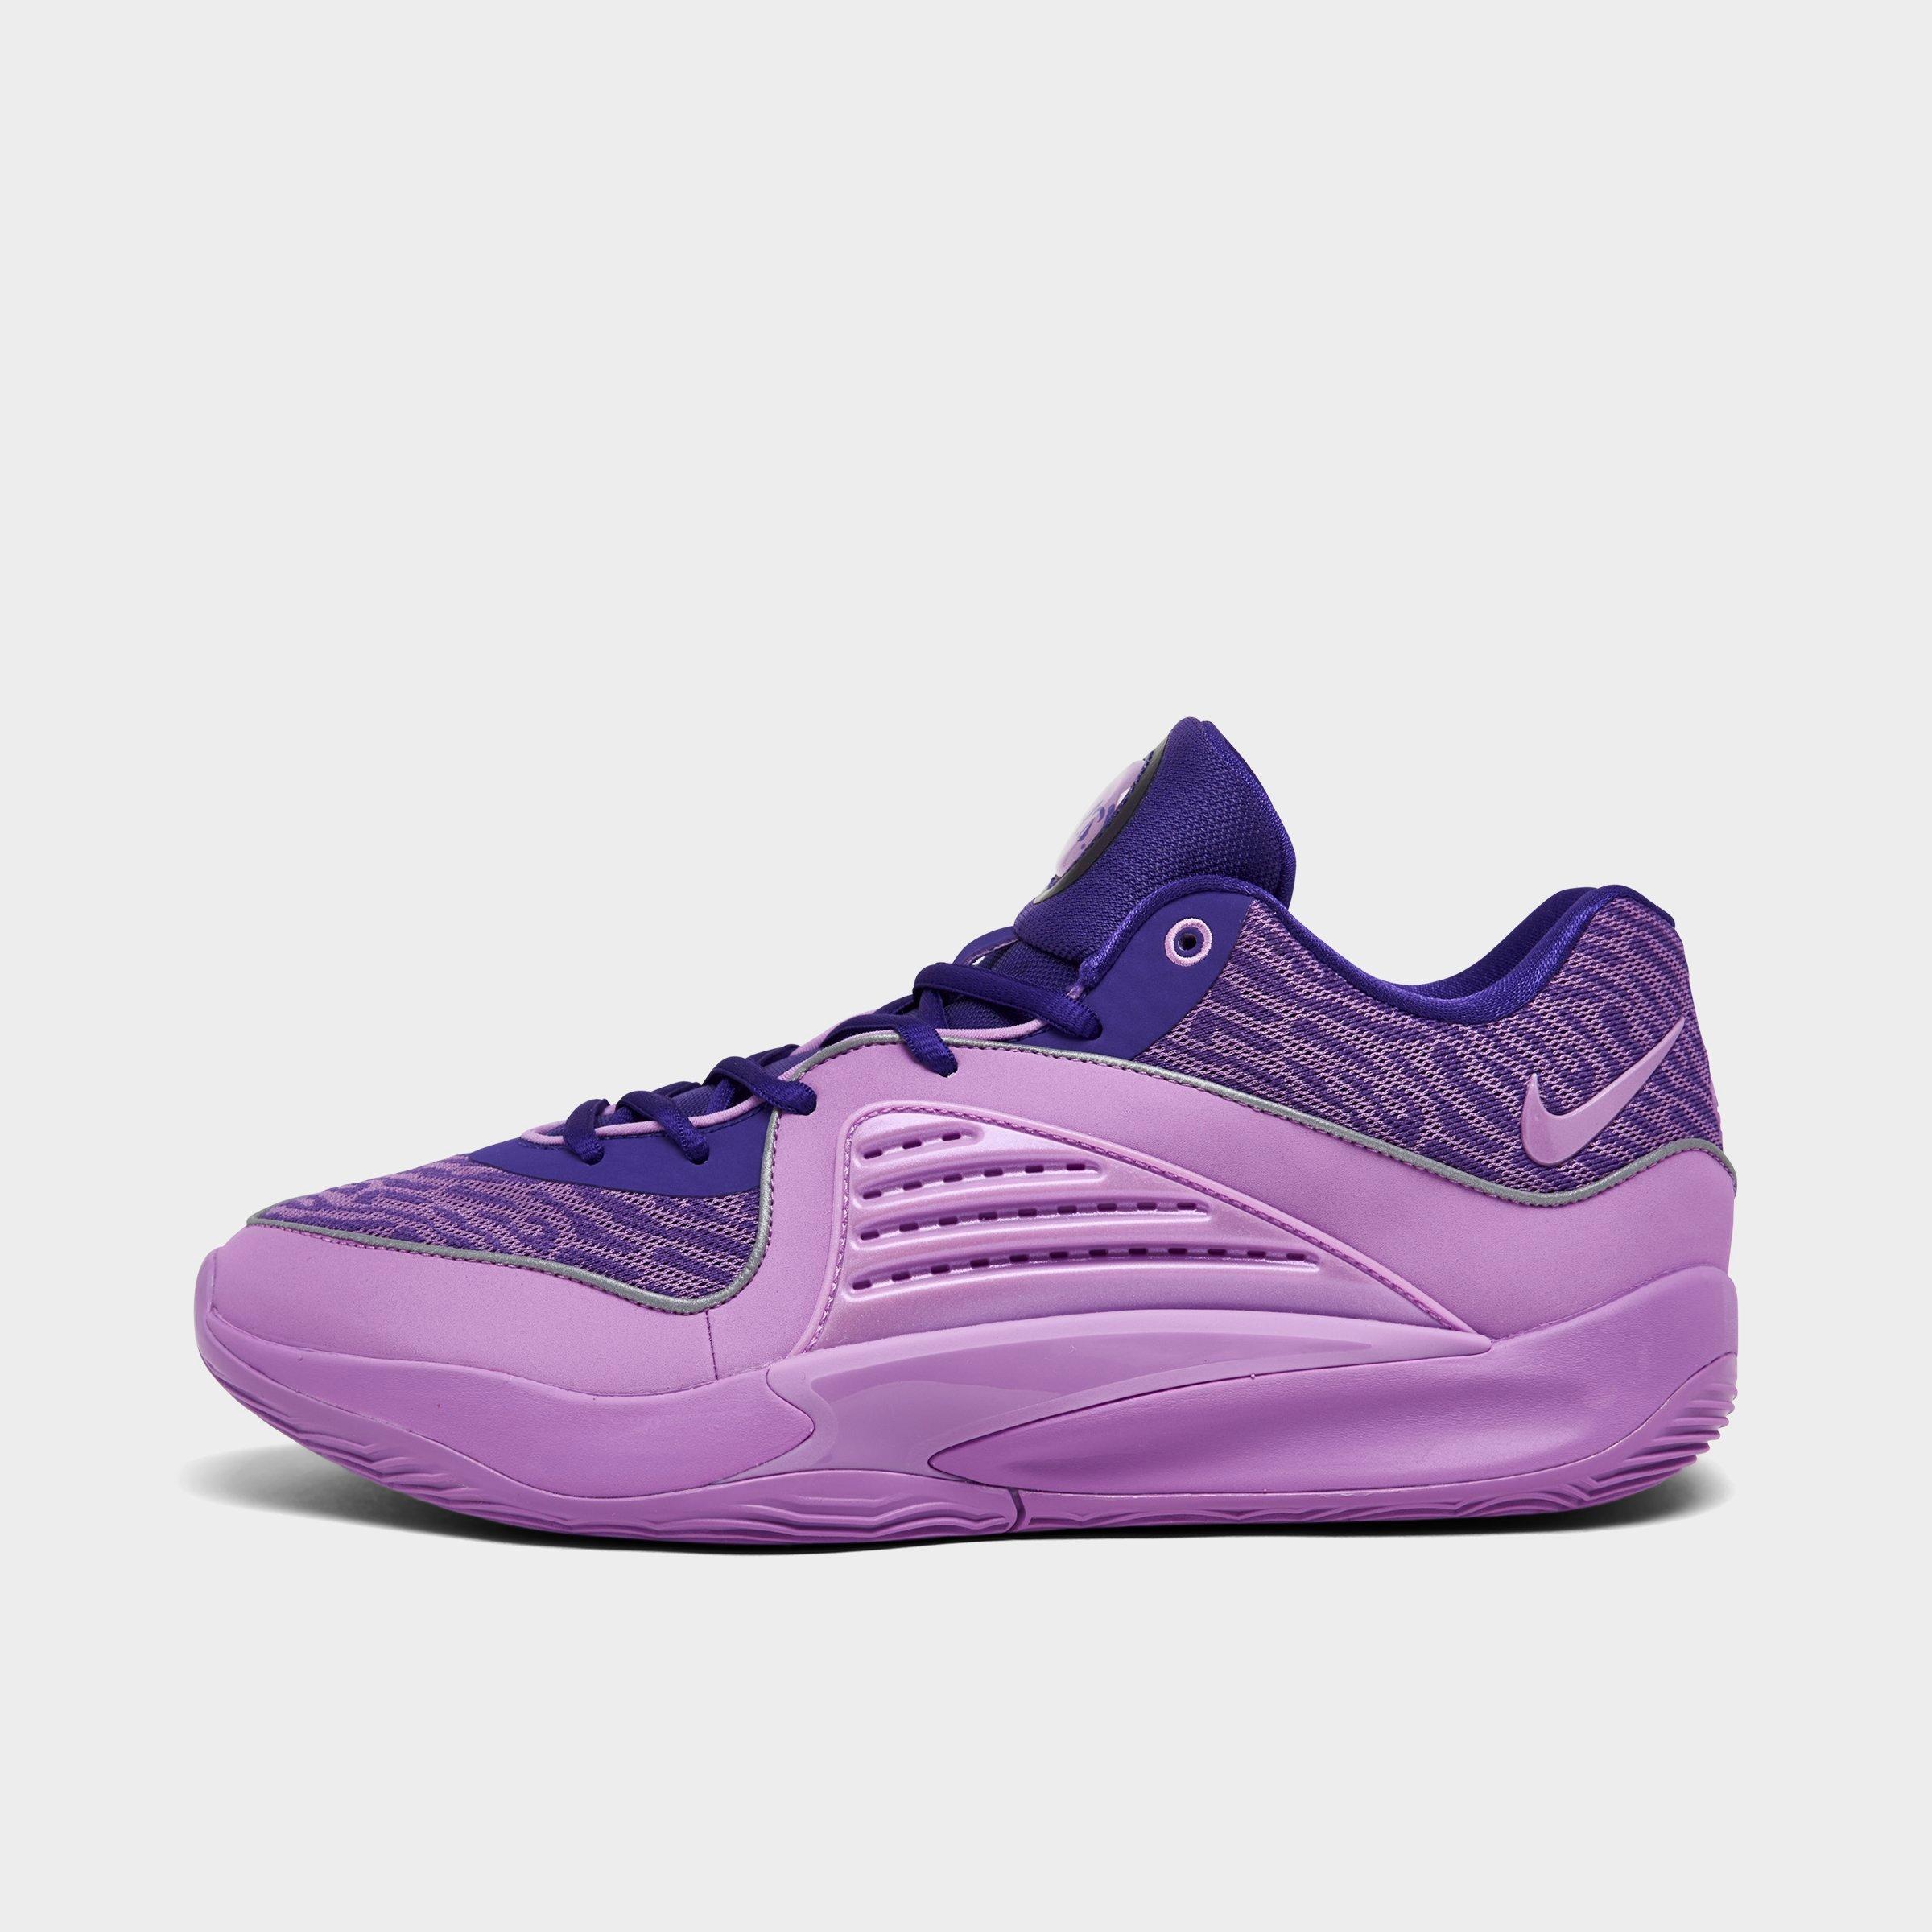 Nike Kd 16 Basketball Shoes Size 12.0 In Field Purple/rush Fuchsia